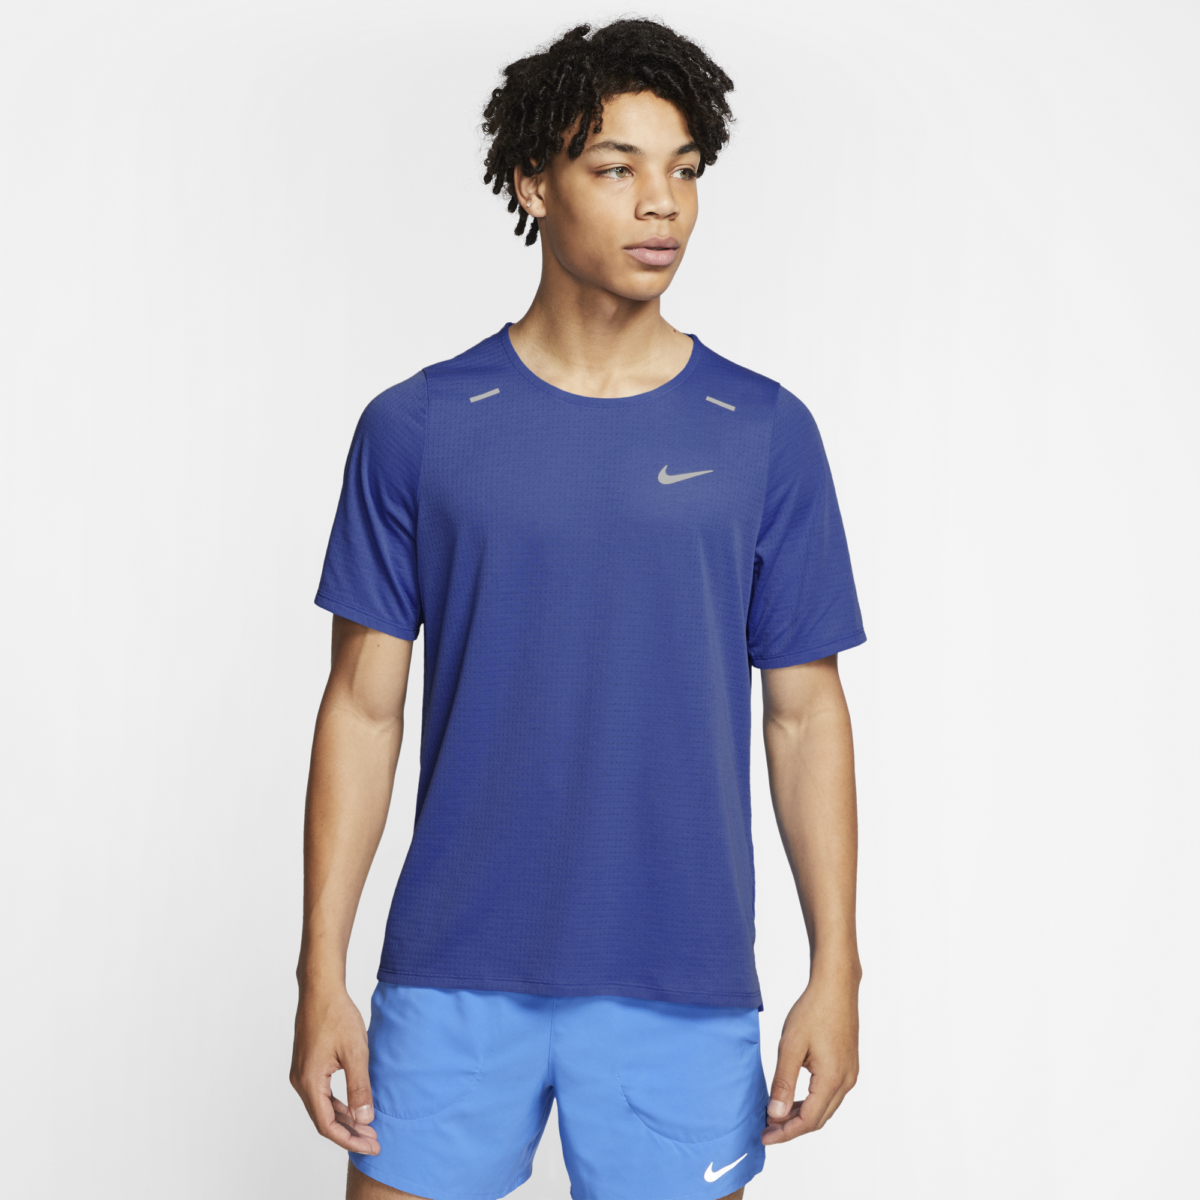 Men's Nike Rise 365 Short Sleeve CJ5420-430